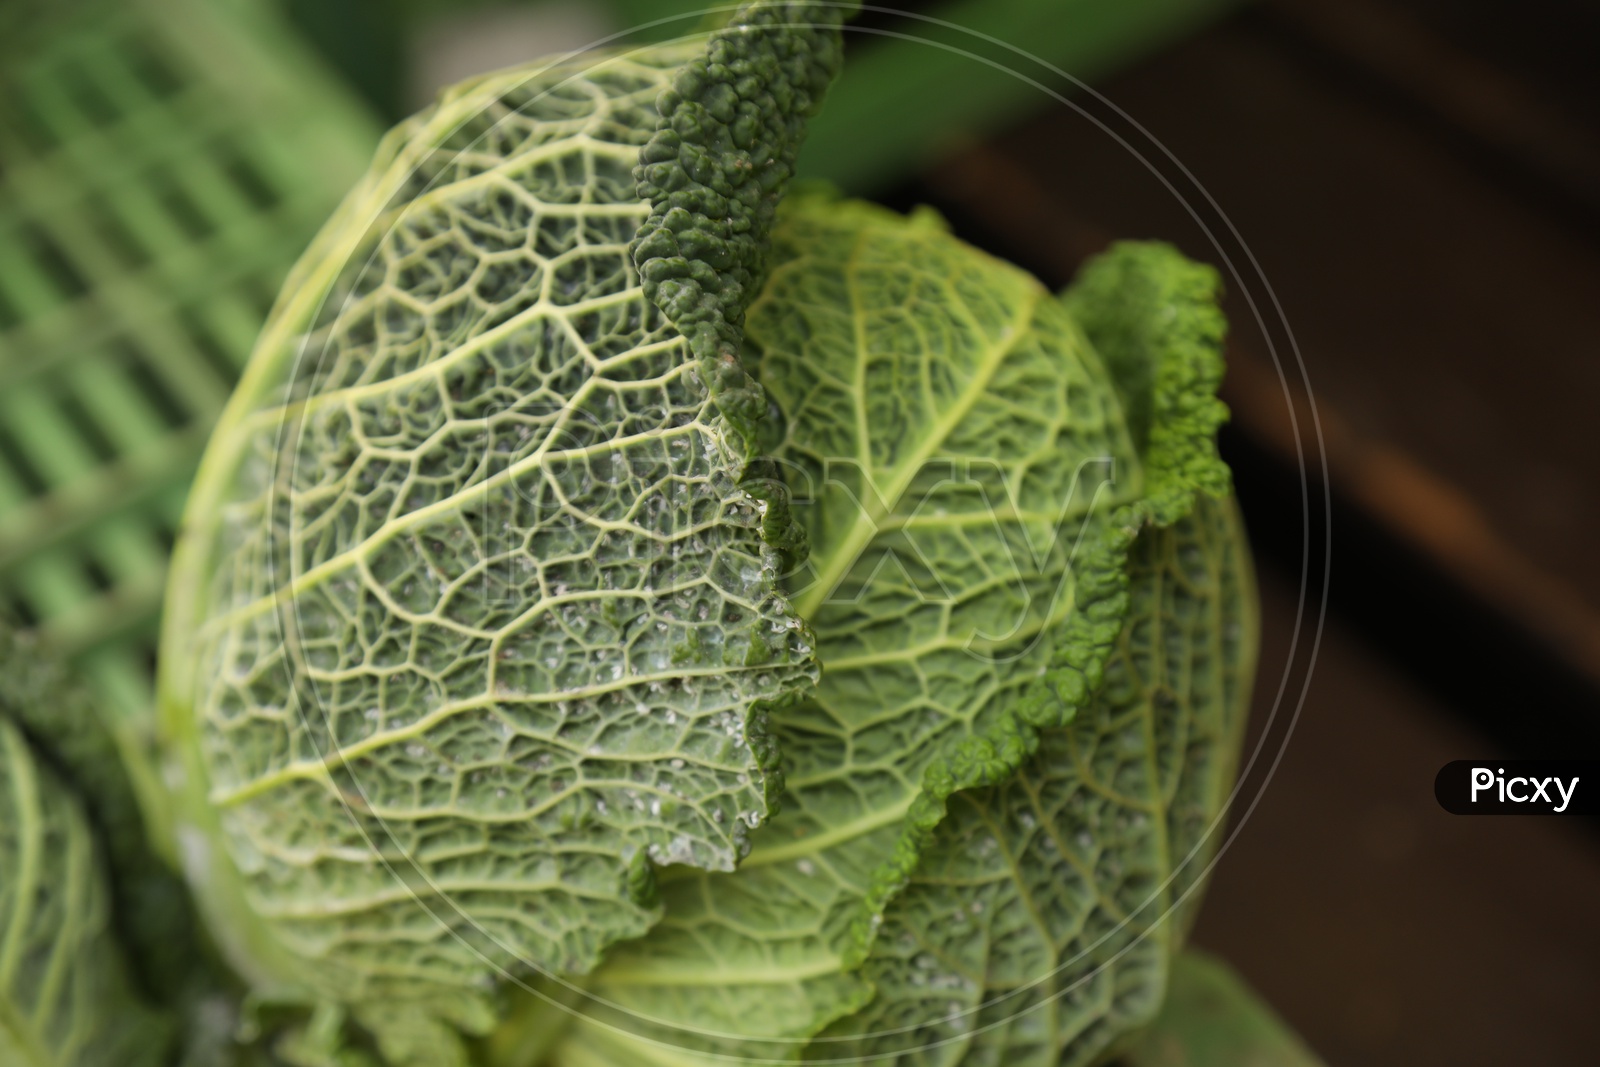 Savoy Cabbage / Green Cabbage Closeup Shot